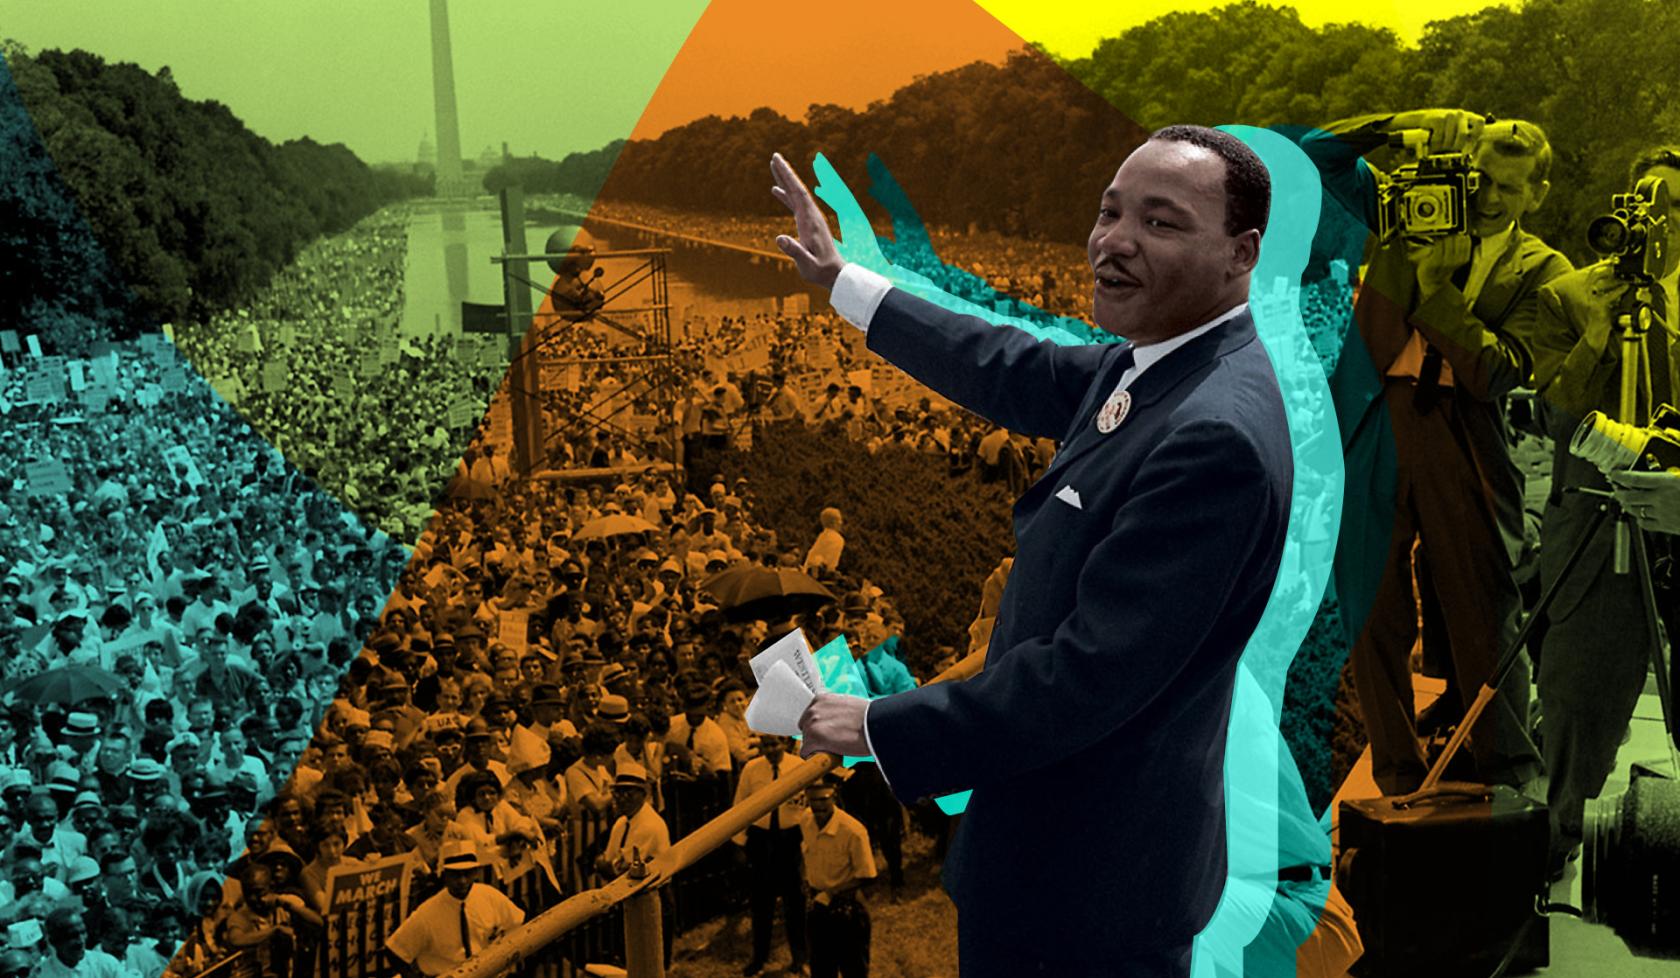 MLK JR Hero Image - NAACP